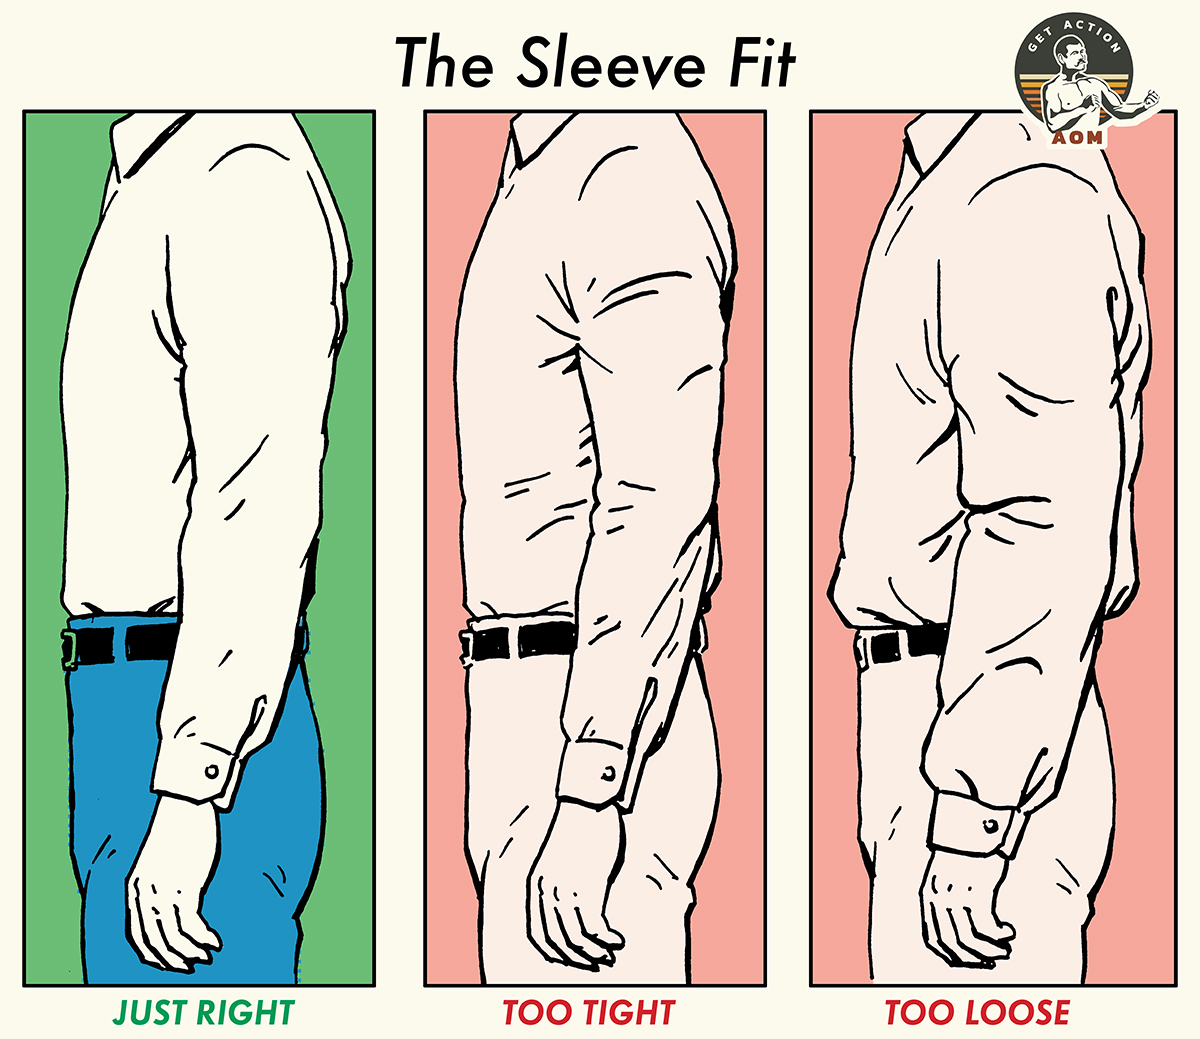 Sleeve fit men's dress shirt illustration.